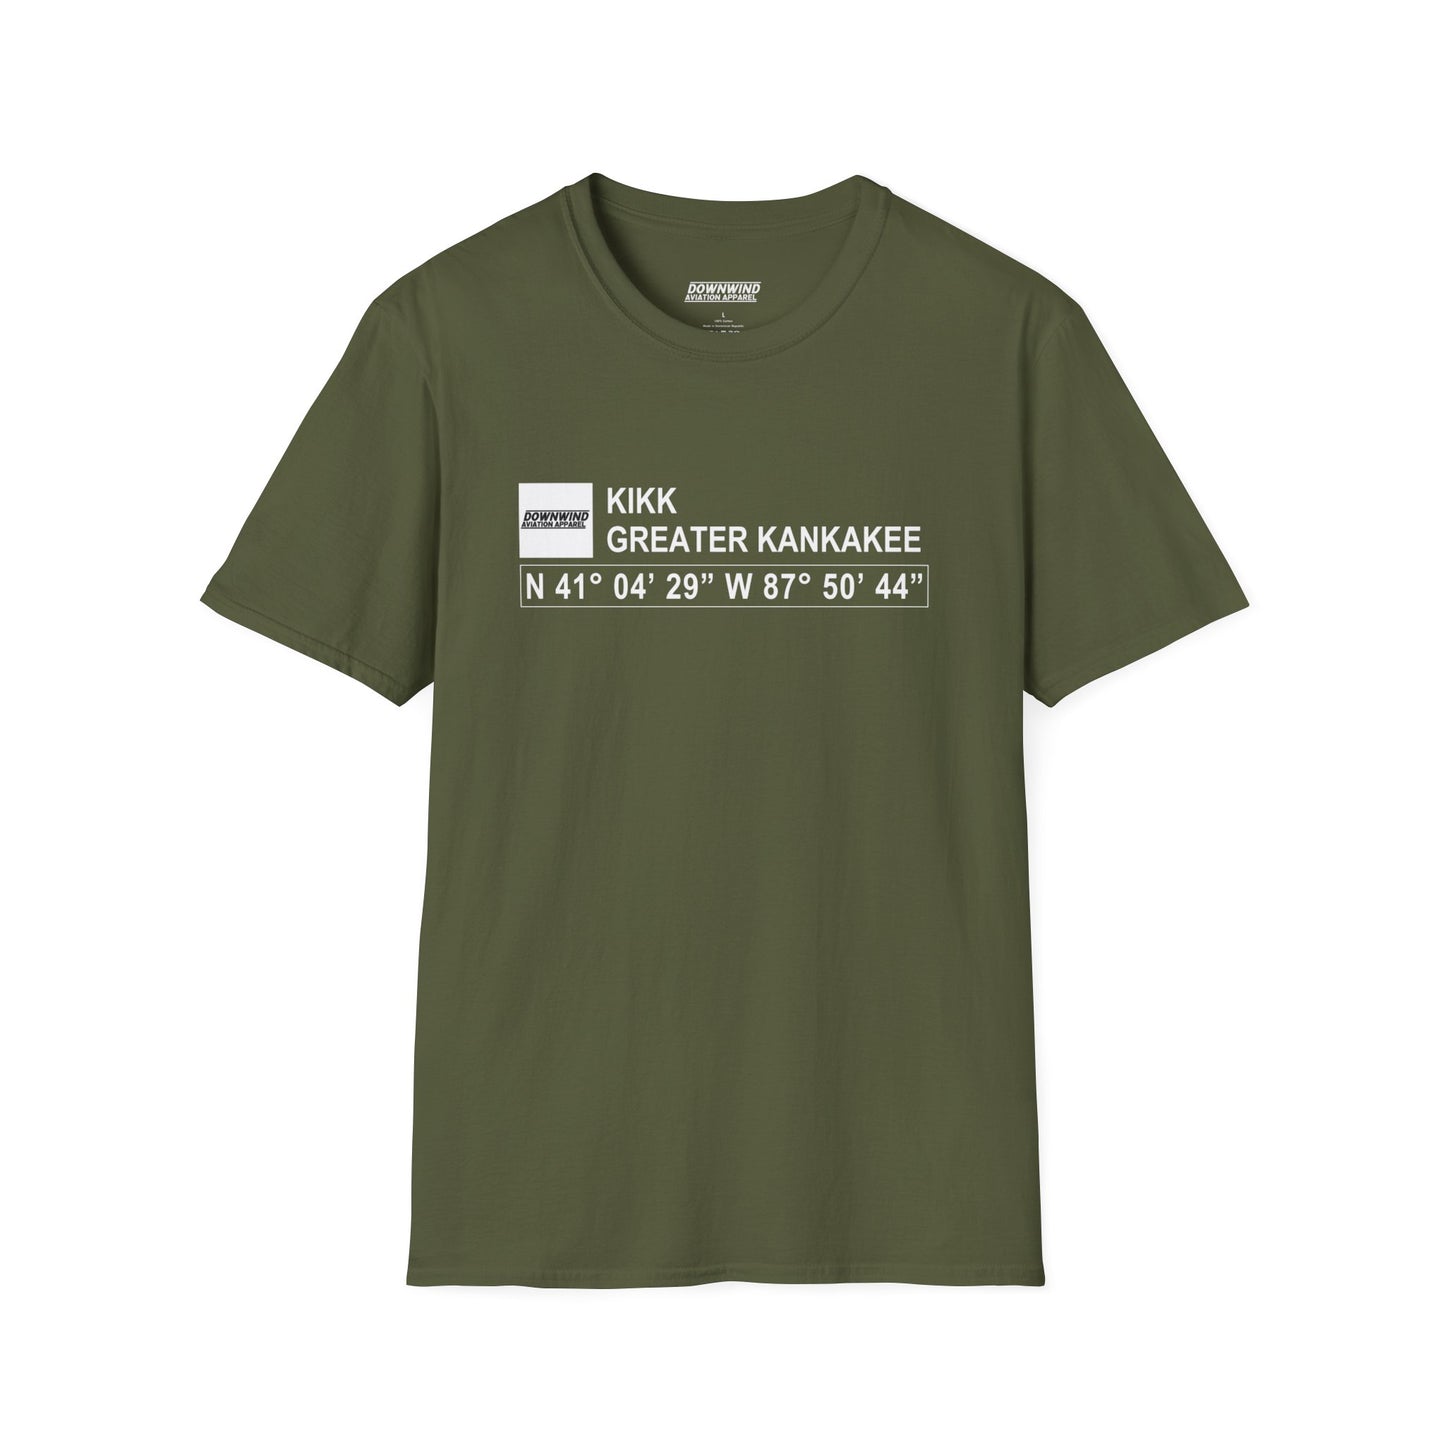 KIKK / Greater Kankakee T-Shirt